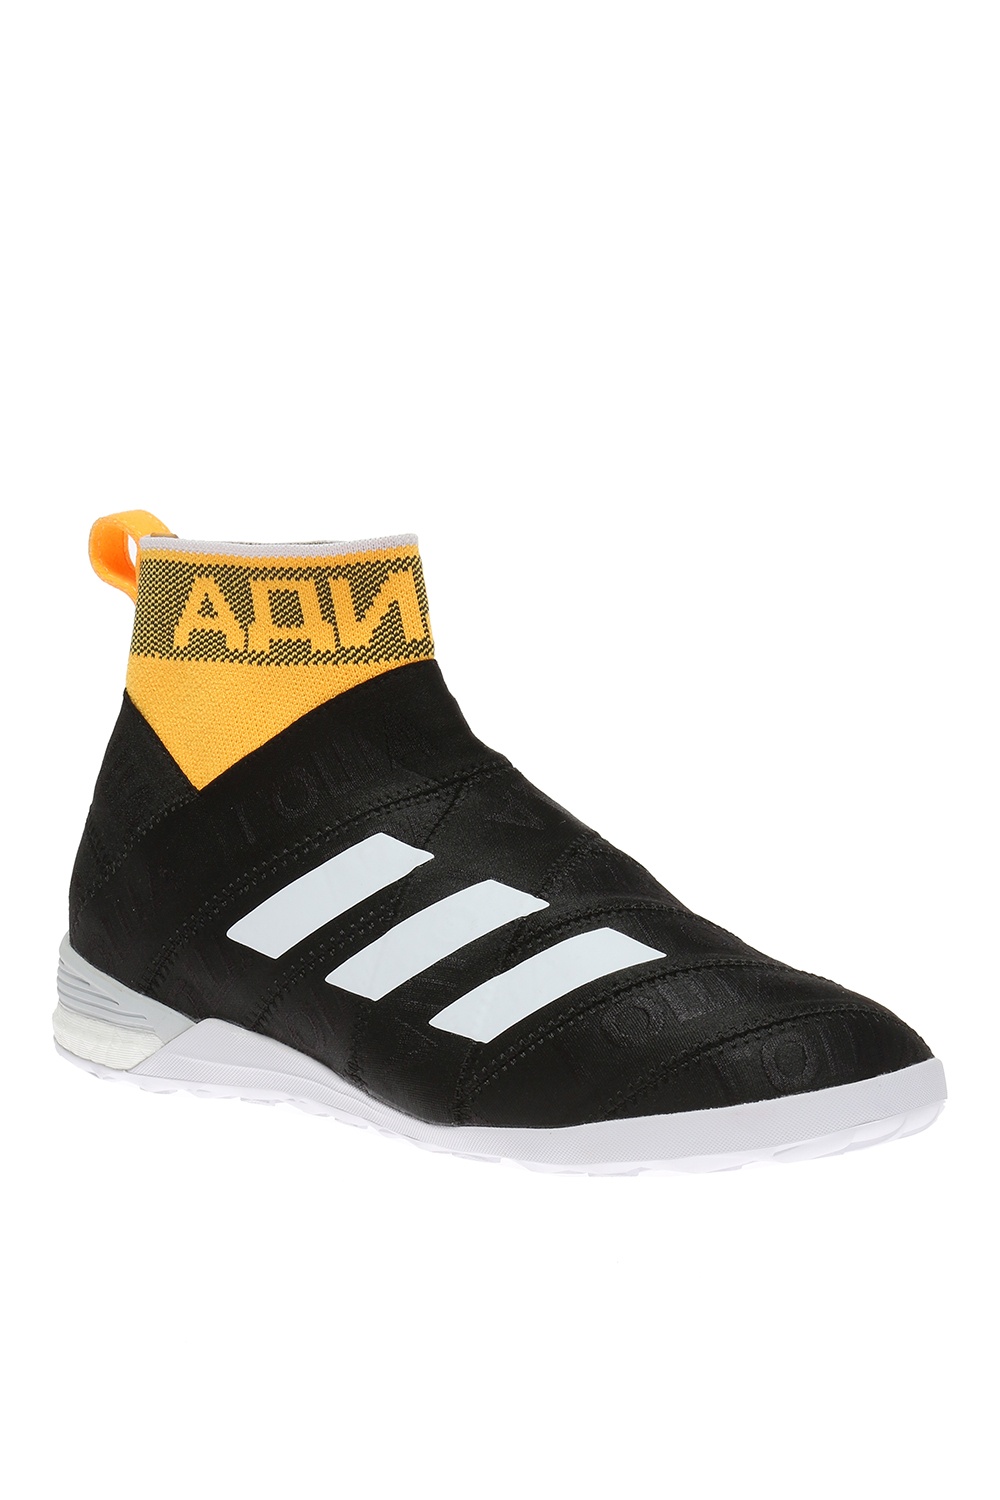 Rubchinskiy Gosha x Adidas | Men's Shoes | Vitkac